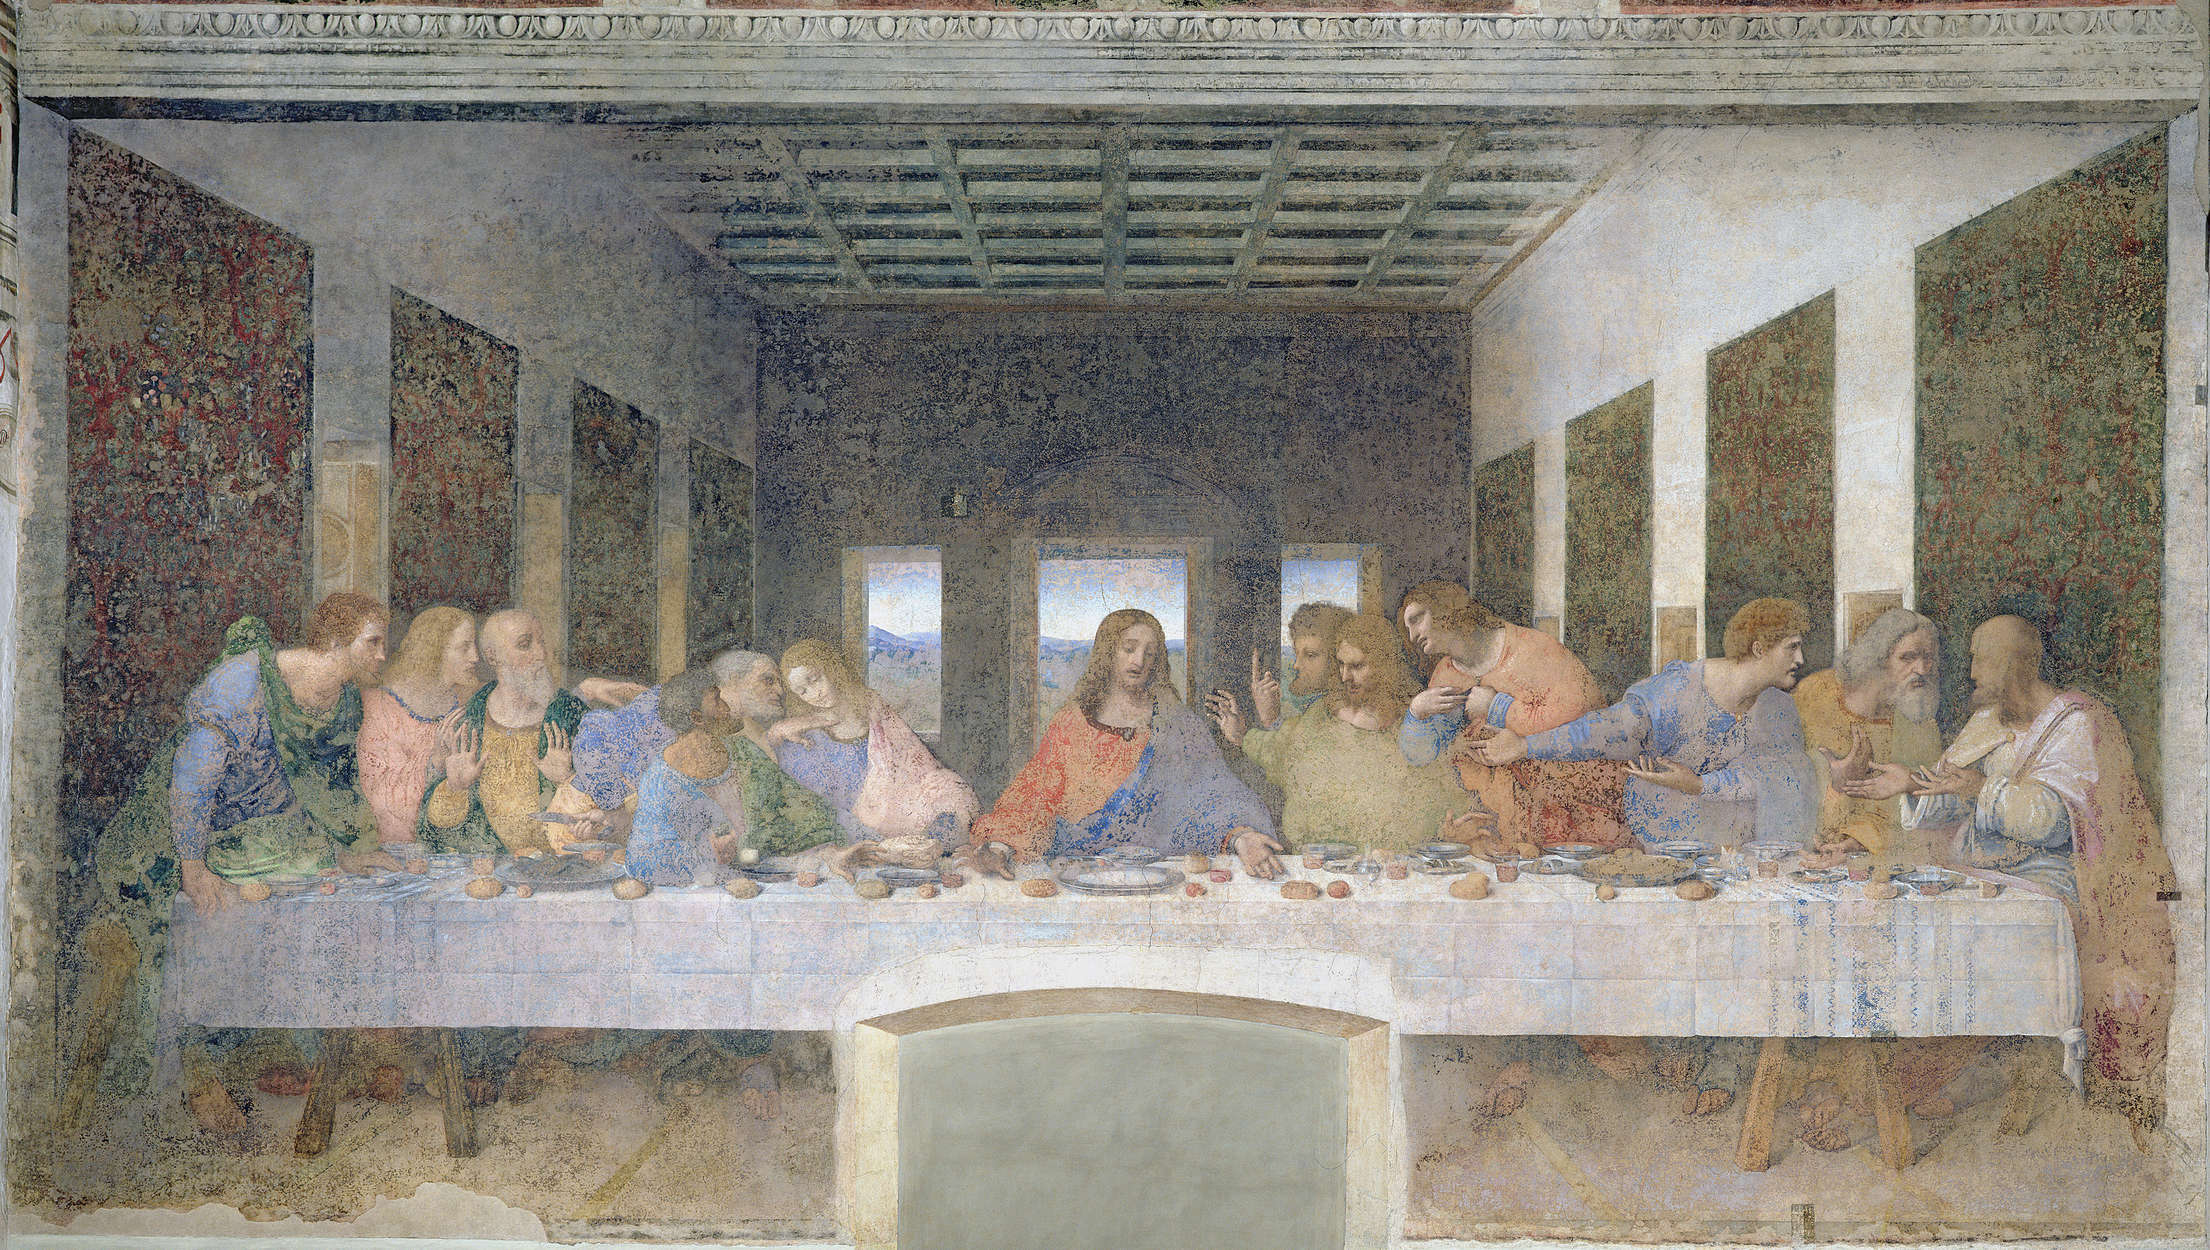             Fototapete "Das letzte Abendmahl" von Leonardo da Vinci
        